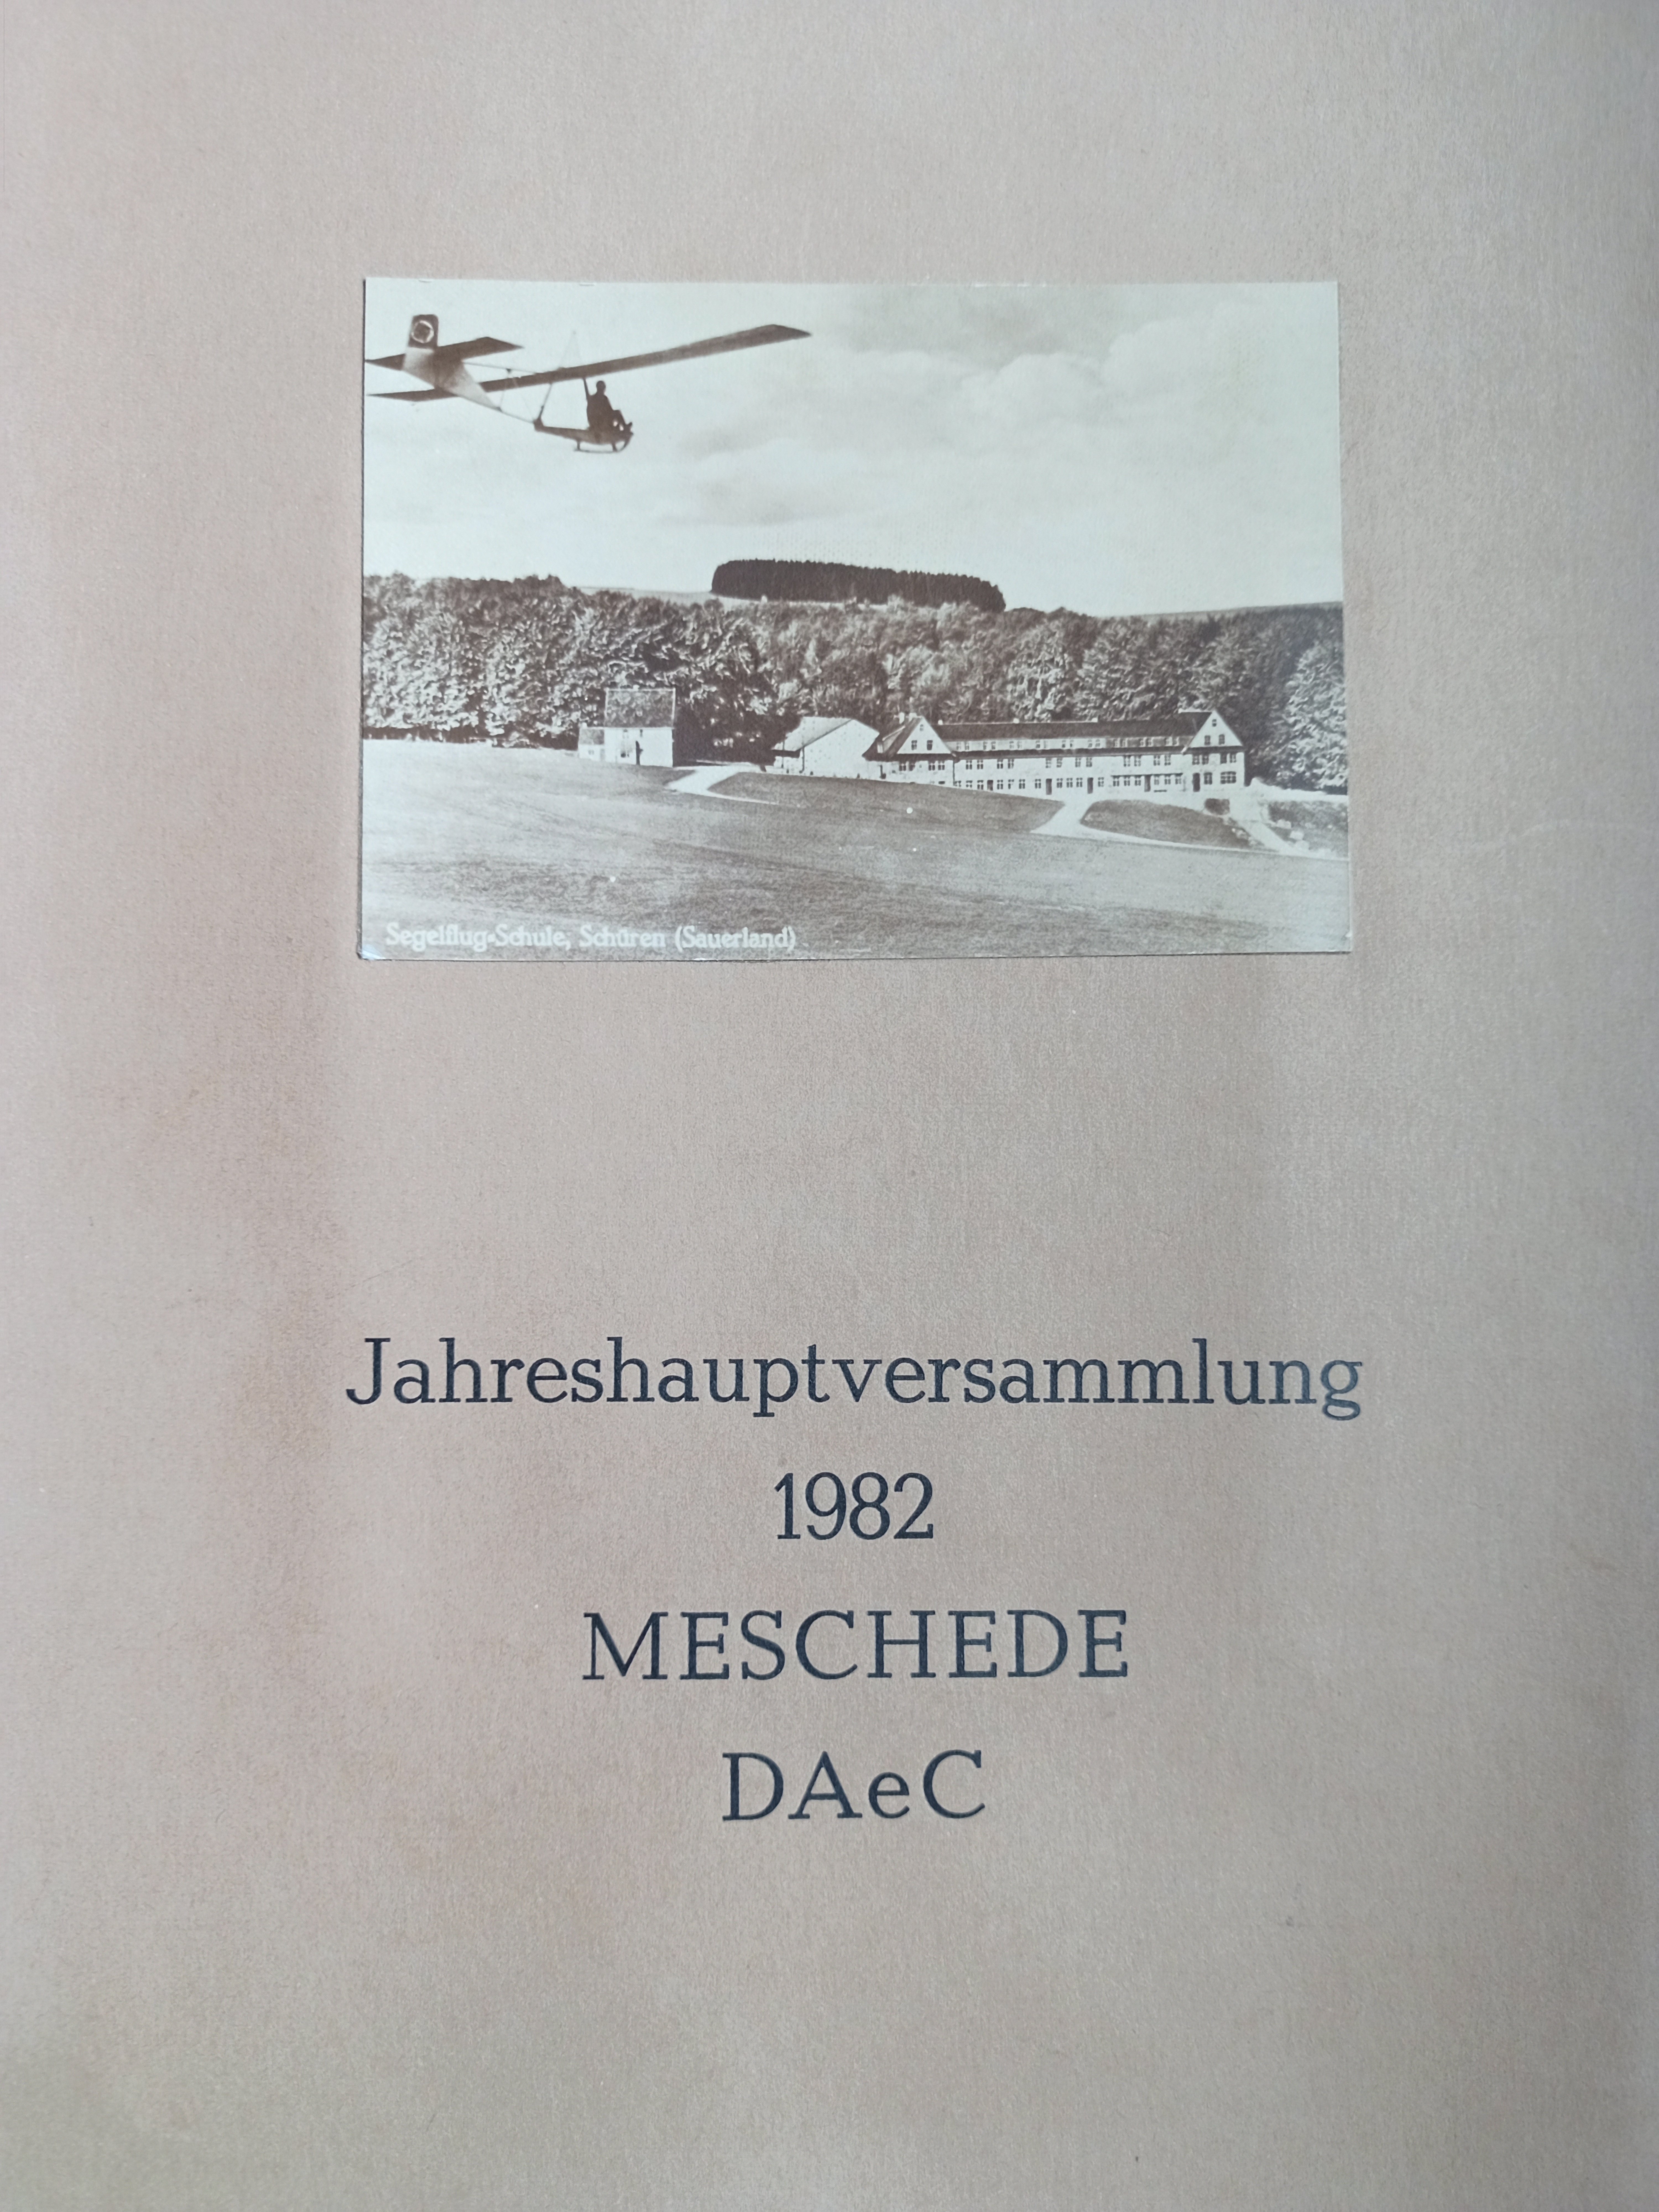 JHV DAeC 1982 Meschede (Deutsches Segelflugmuseum mit Modellflug CC BY-NC-SA)